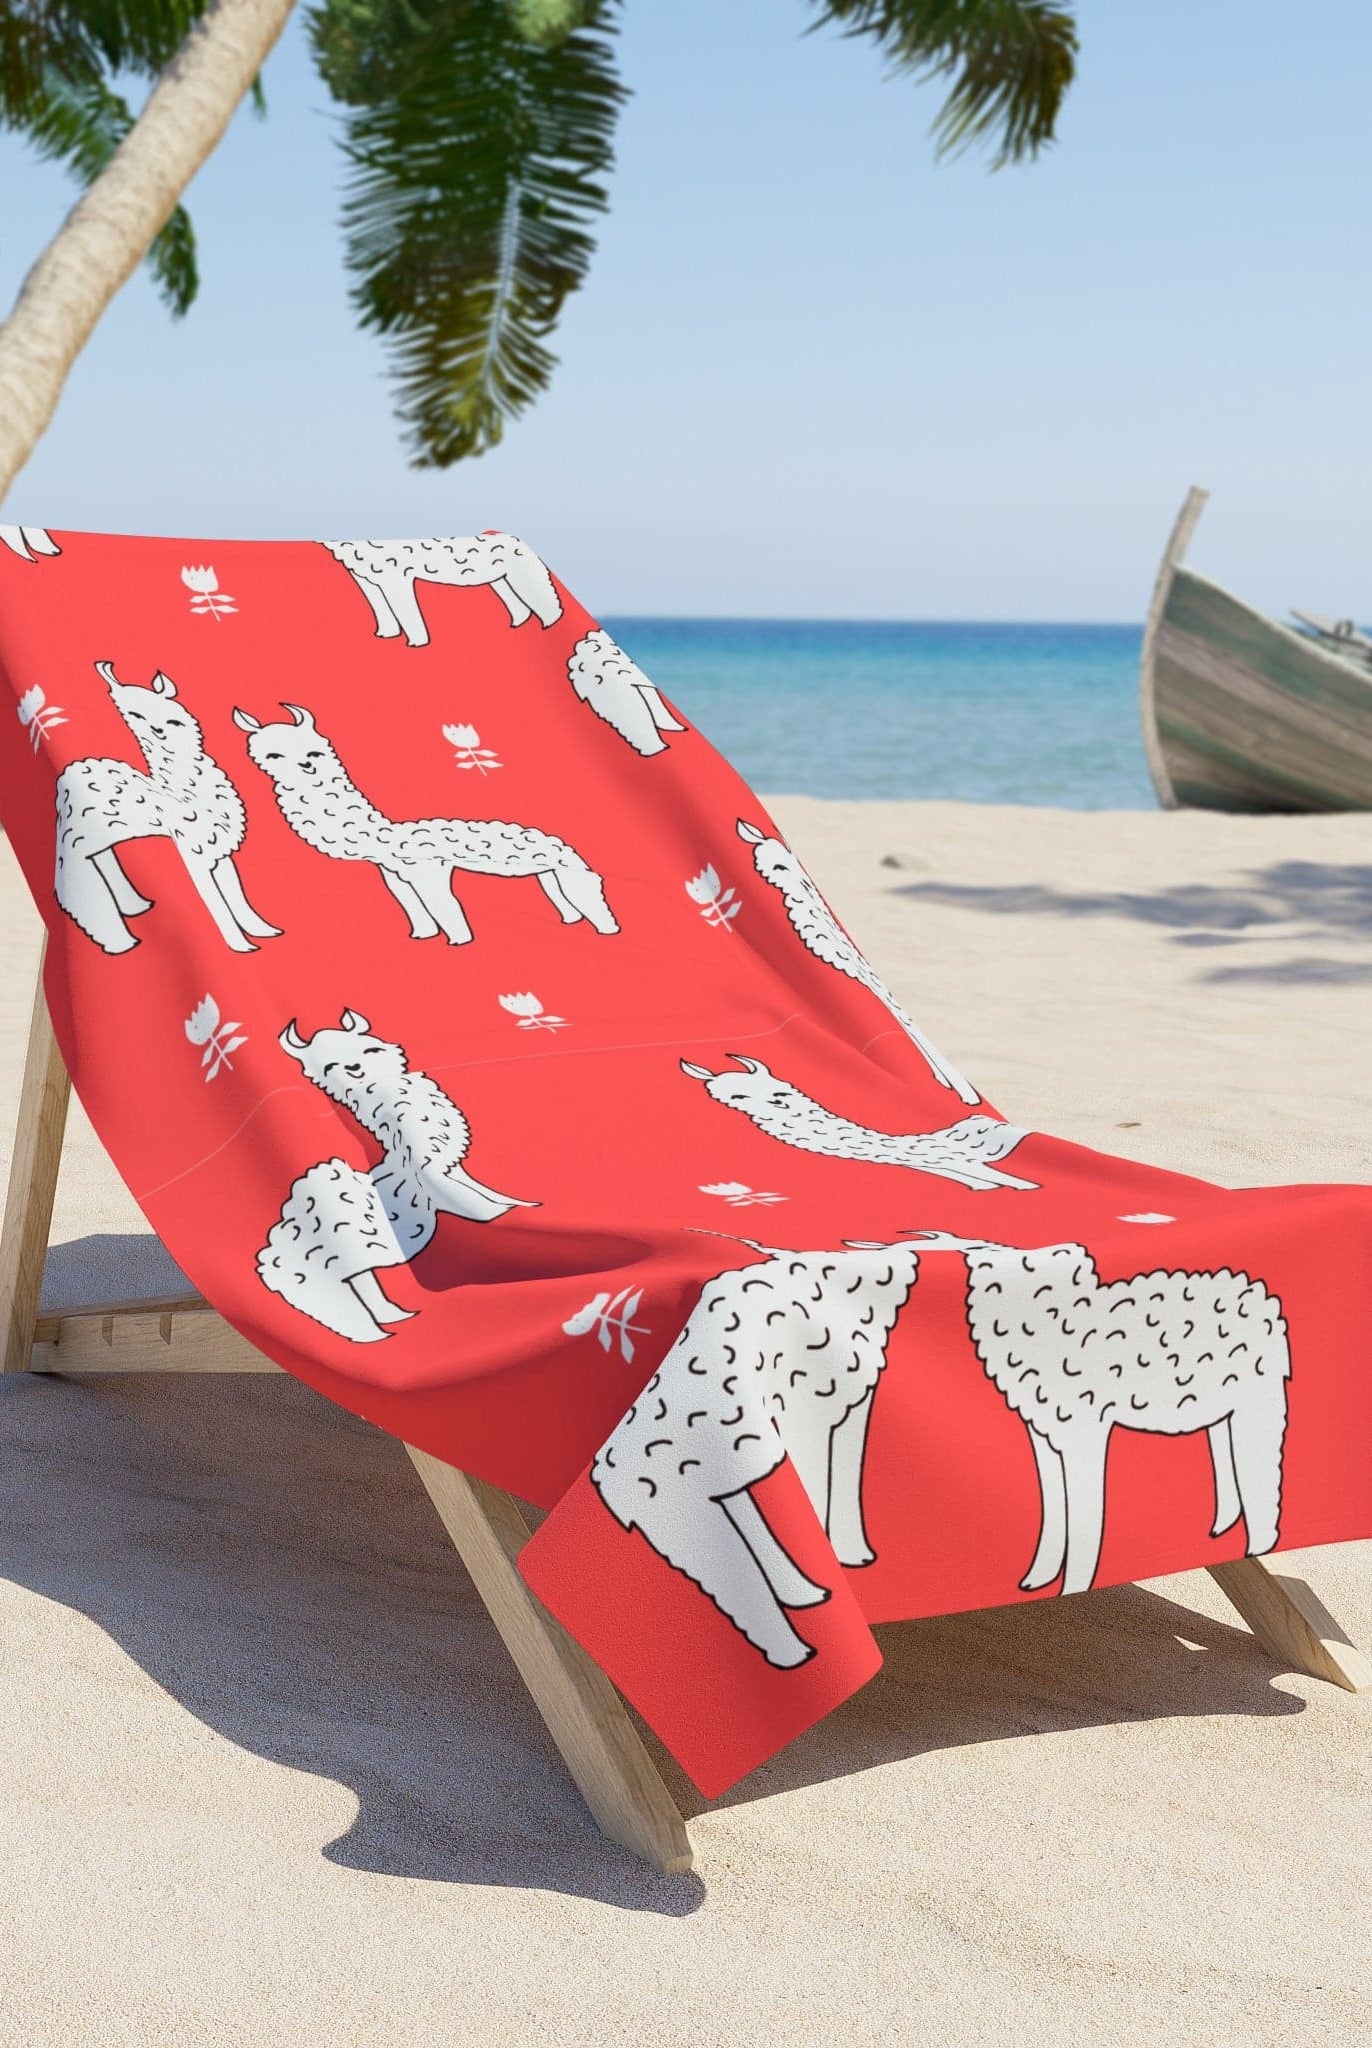 Hot Llama Beach Towel - Plover Robes